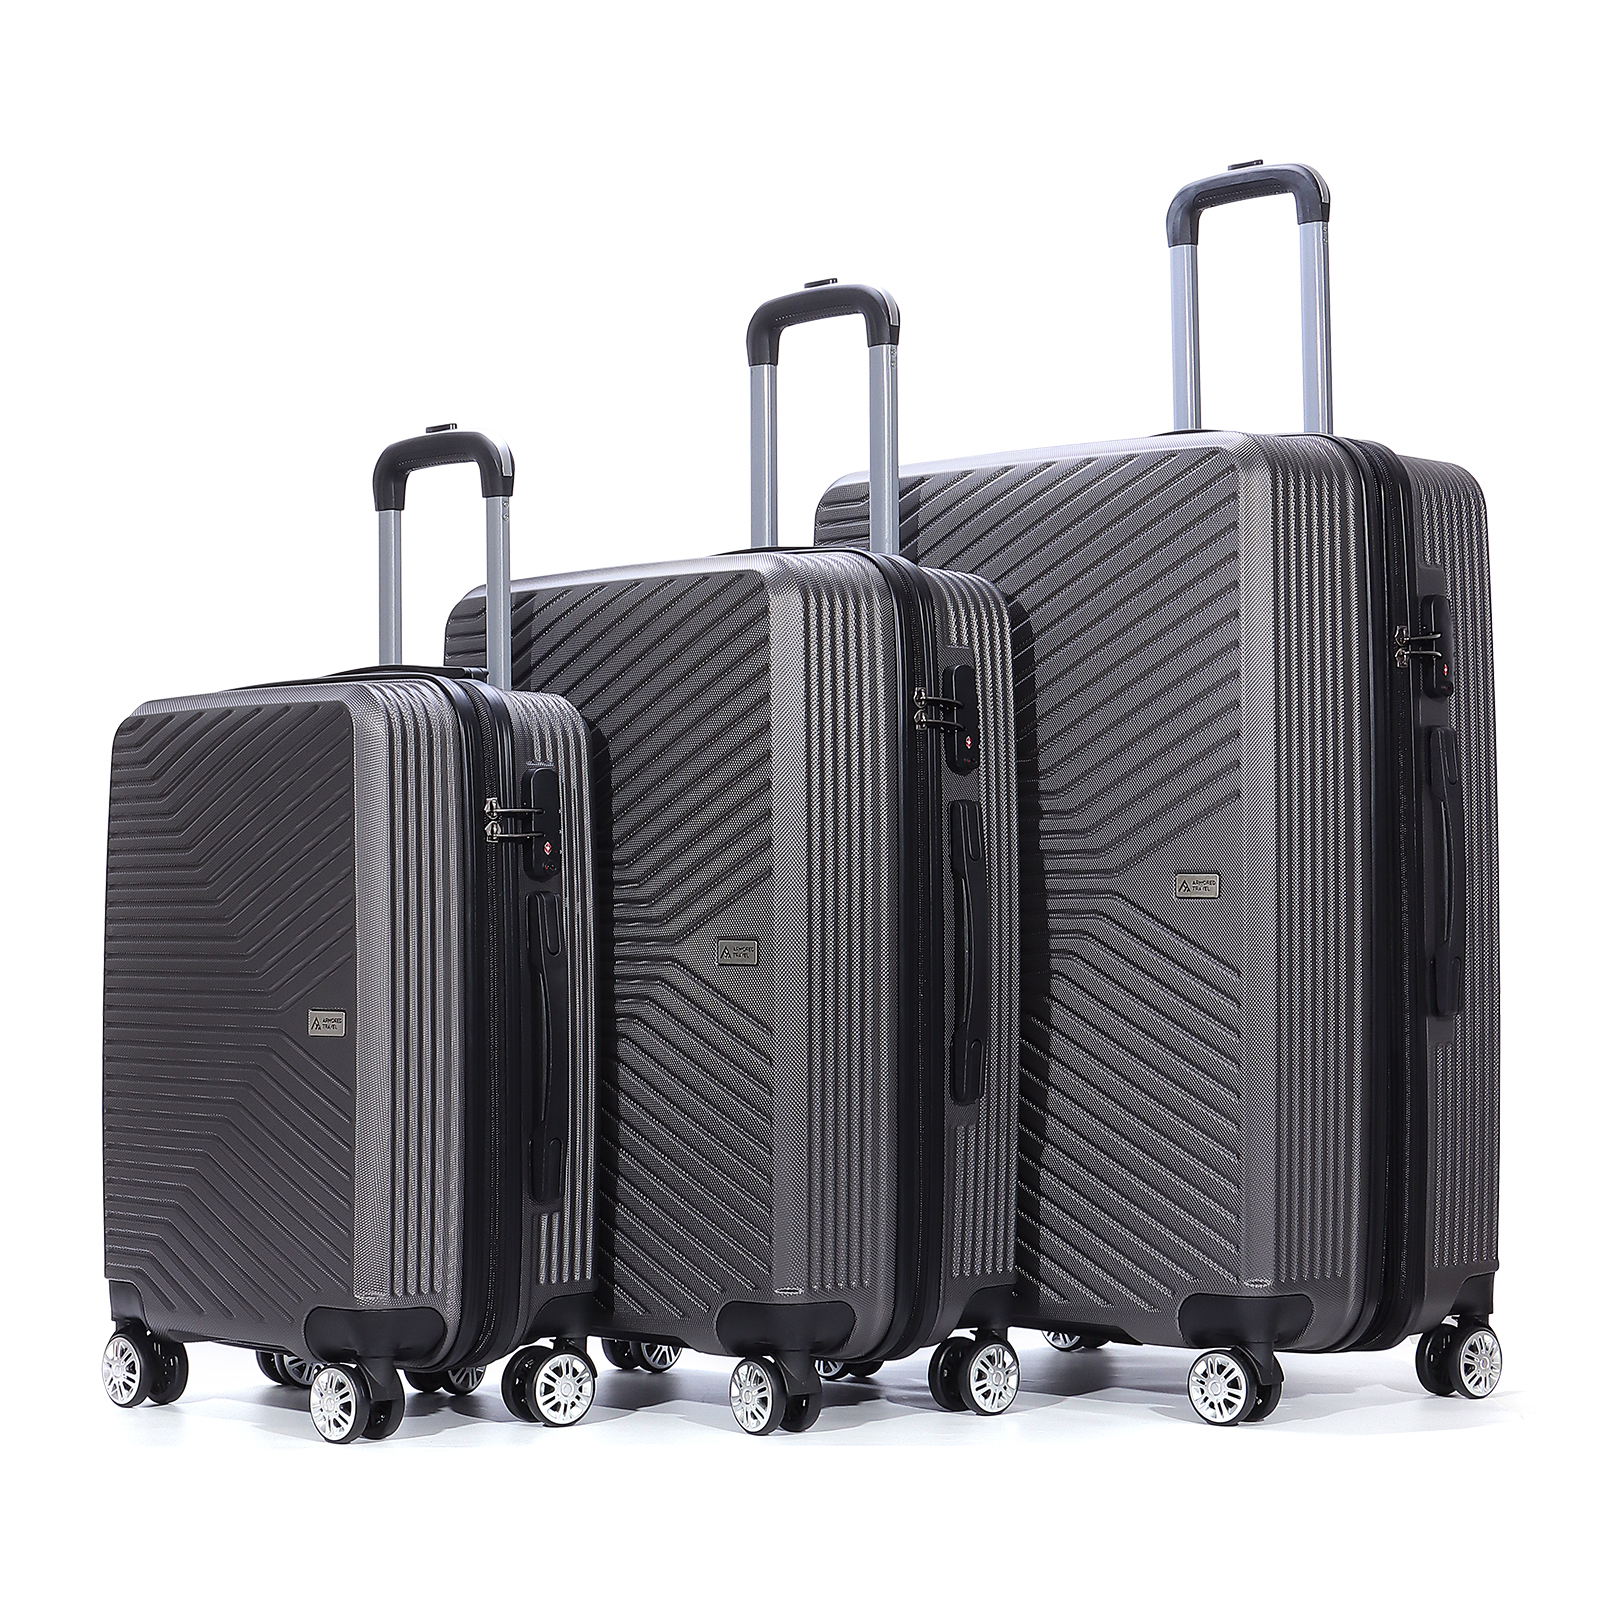 Kit de 2 maletas de viaje pequeñas, ruedas dobles, candado de color crema